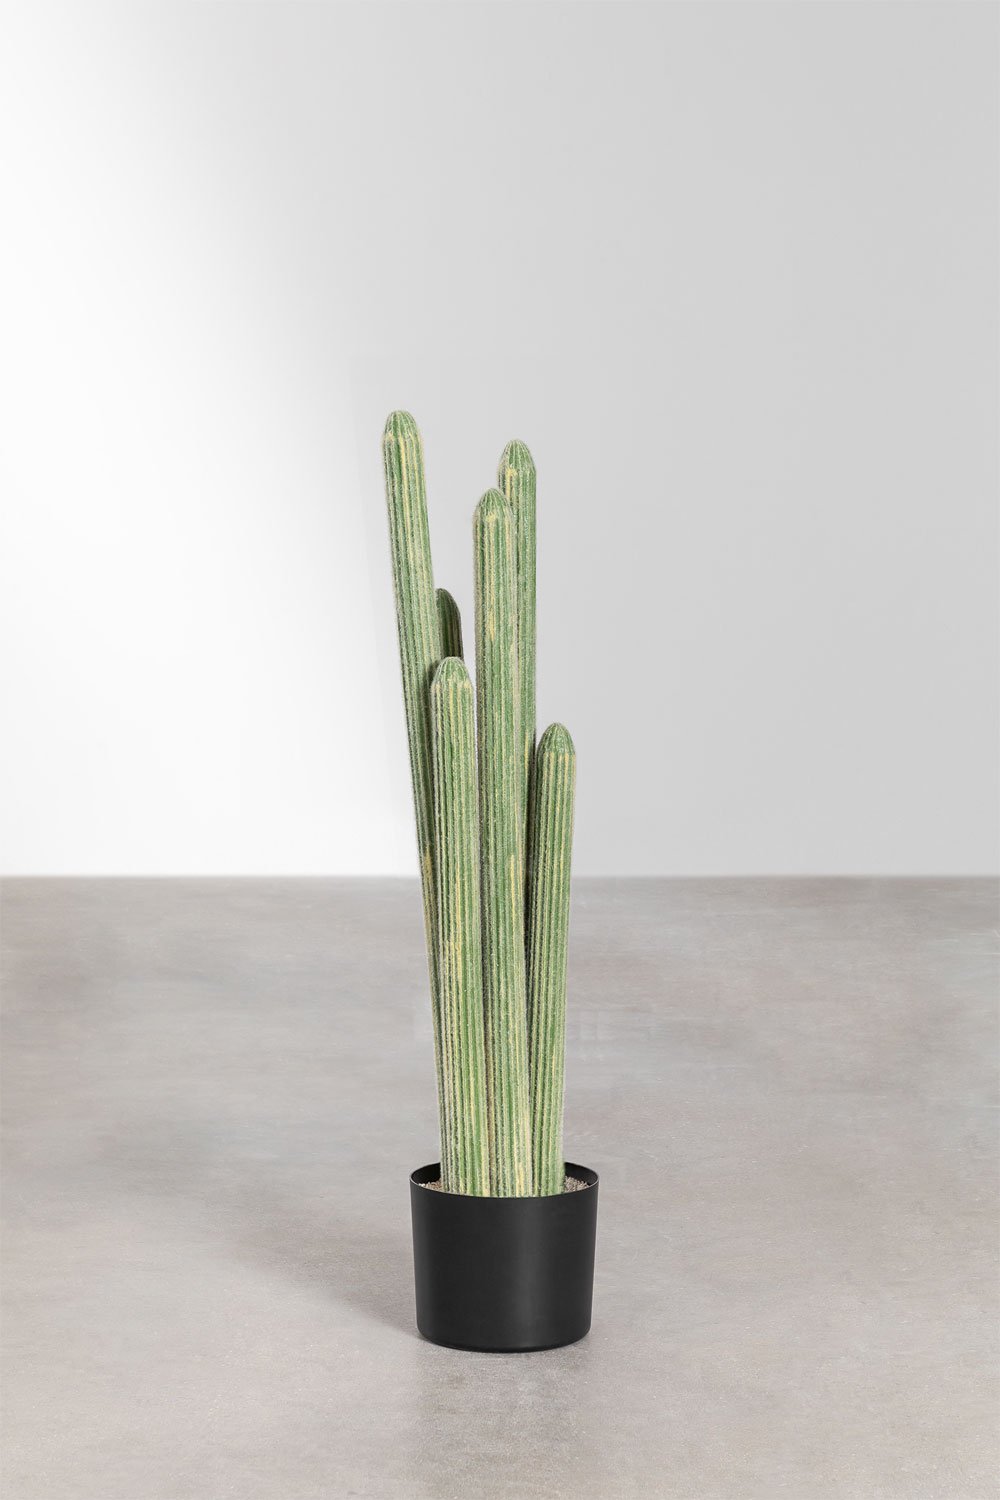 Cactus Saguaro artificiale 120 cm, immagine della galleria 1